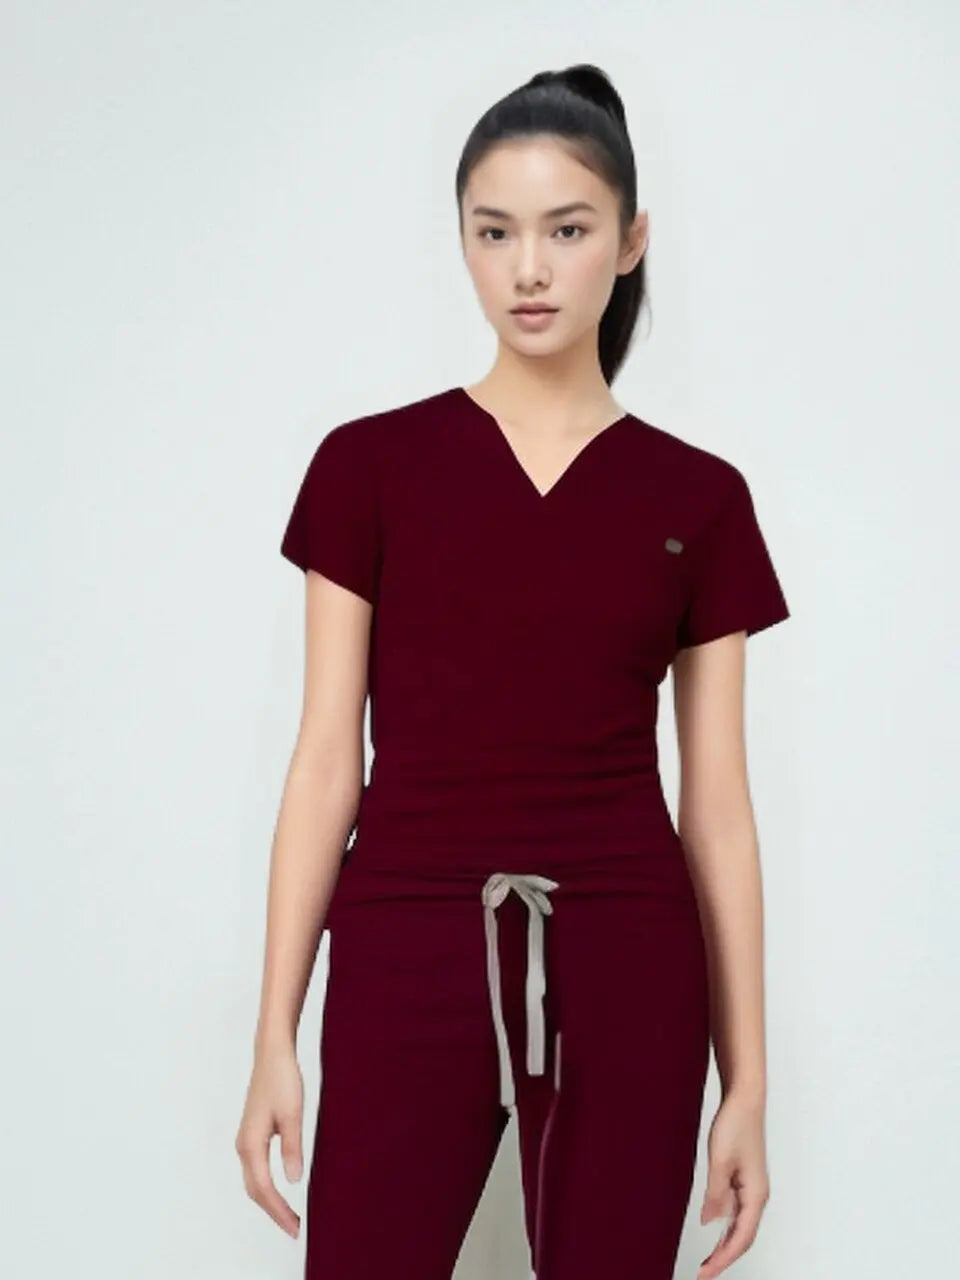 Modern Fit Nurse Attire: Tailored Comfort My Store